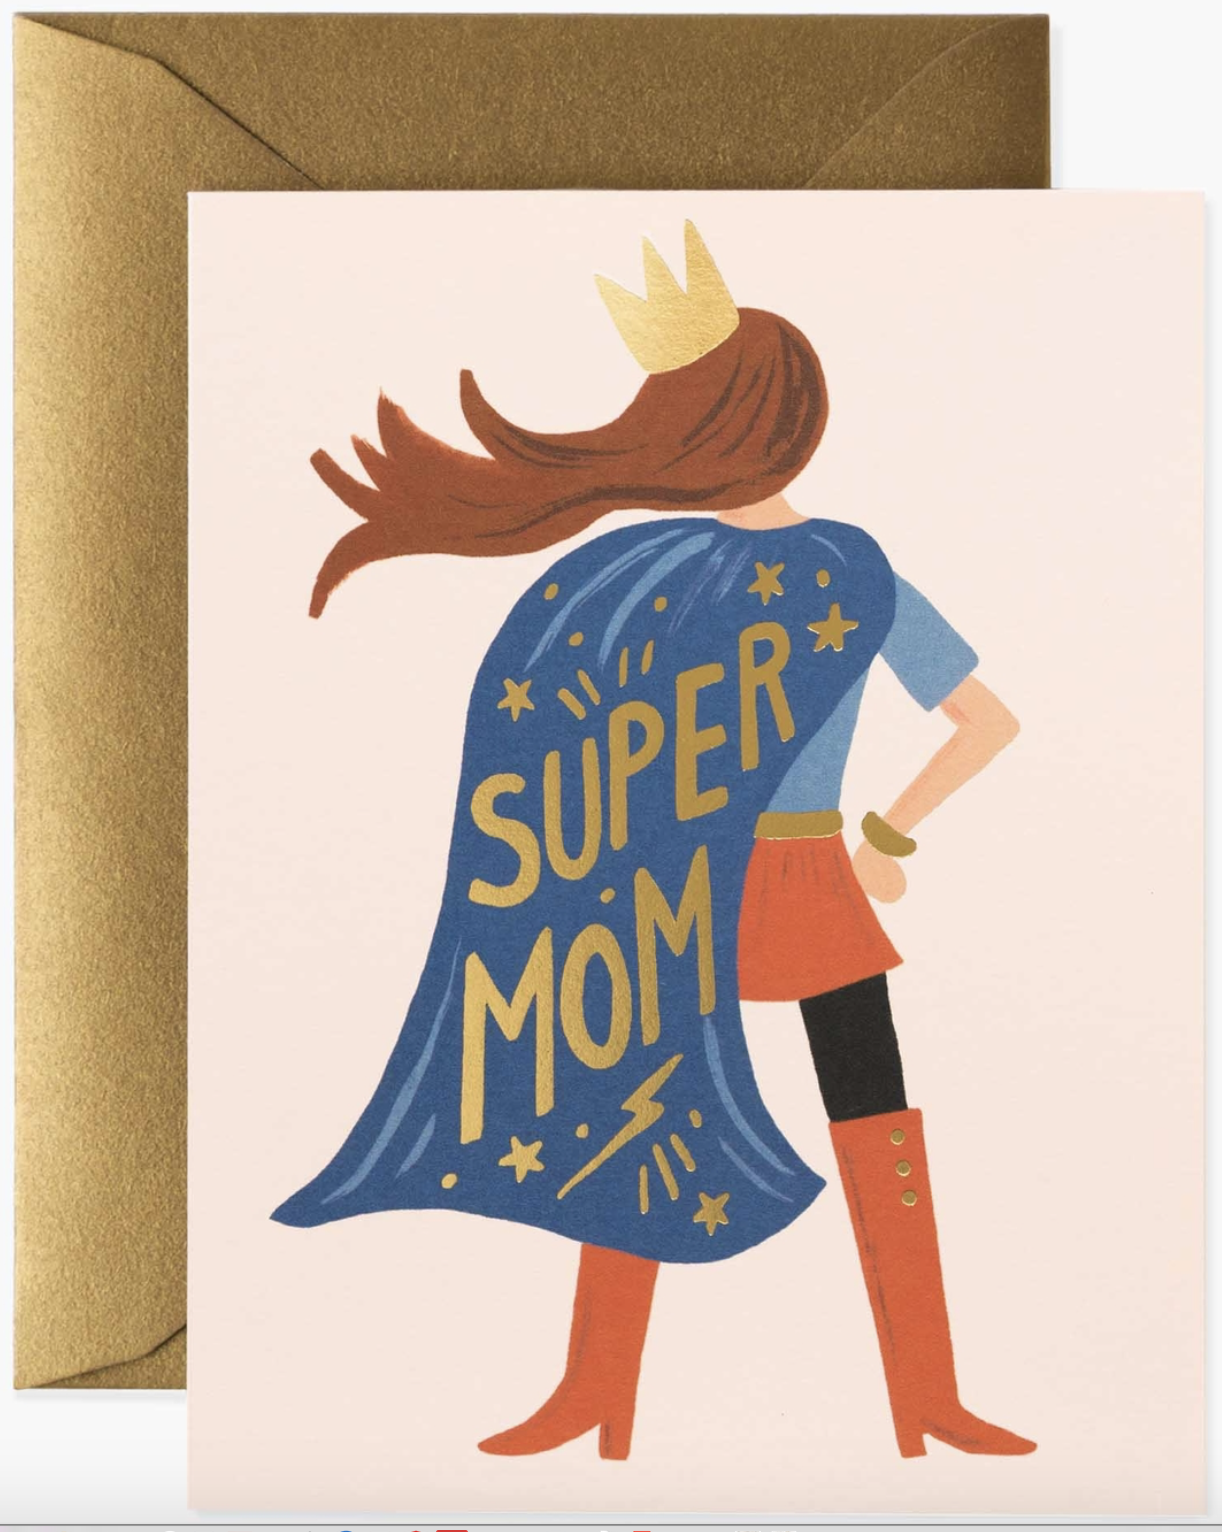 Super Mom Card